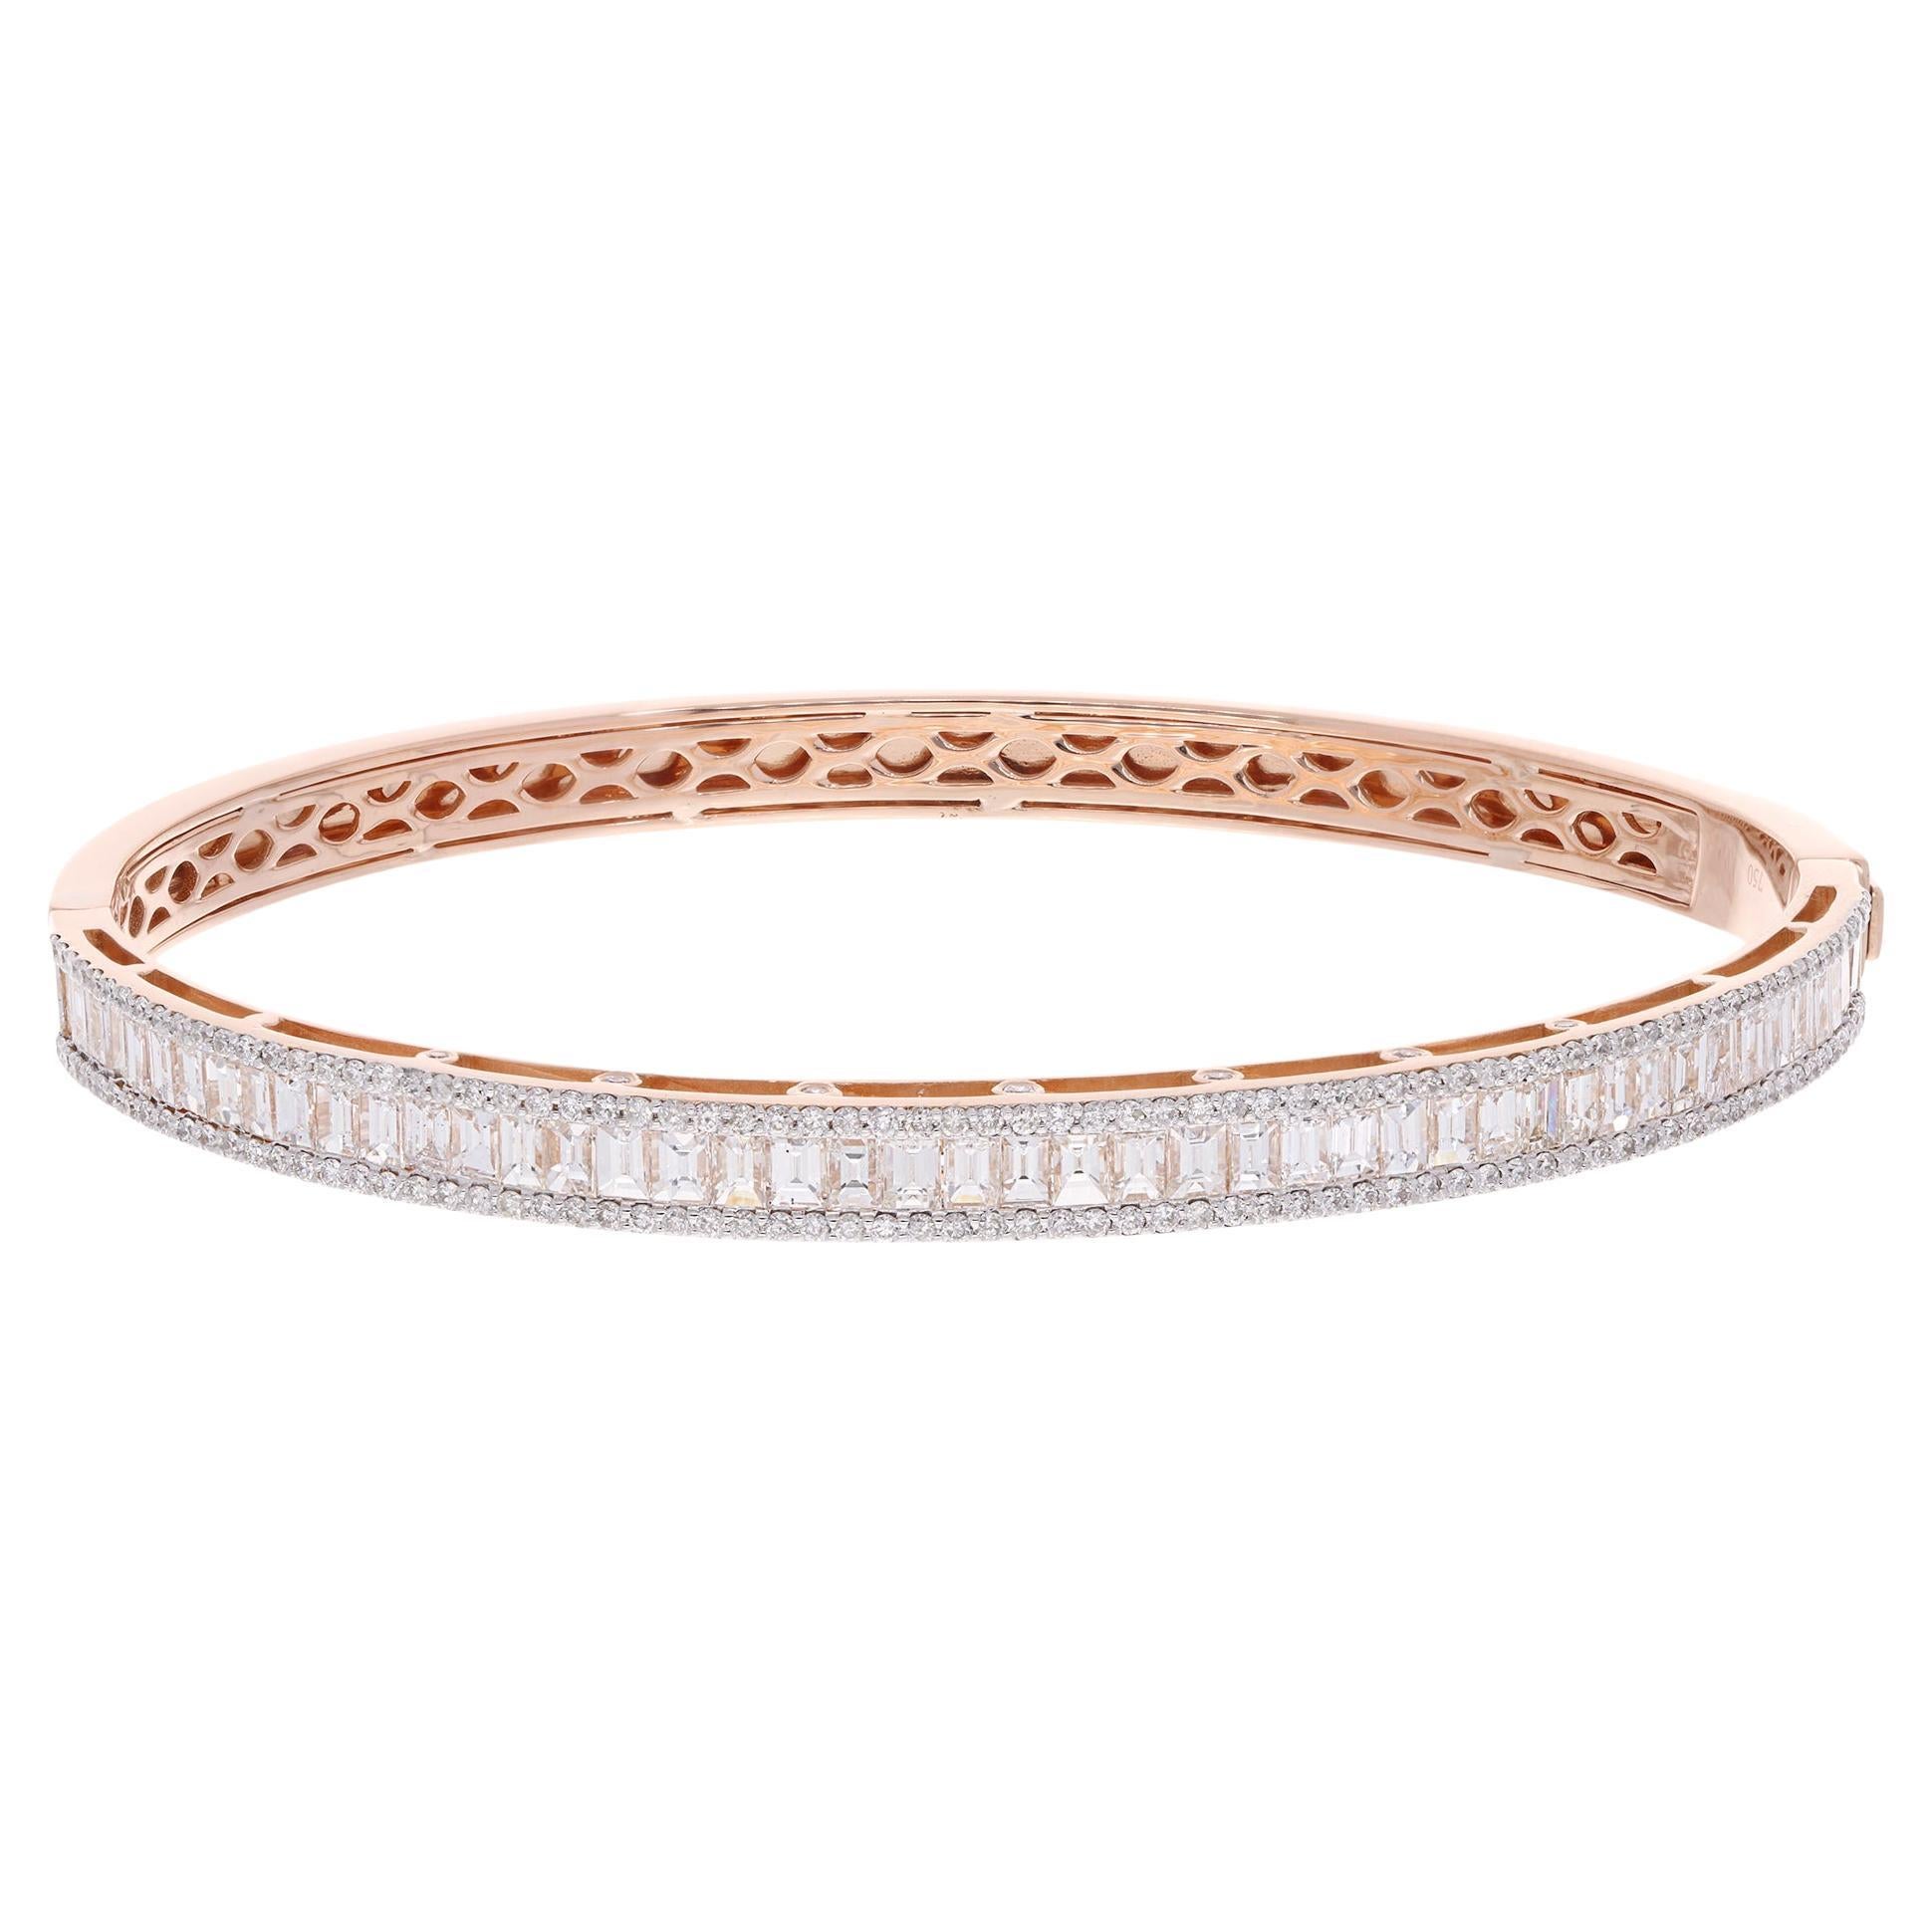 4.90 Carat Round & Baguette Shape Diamond Bracelet 18 Karat Rose Gold Jewelry For Sale